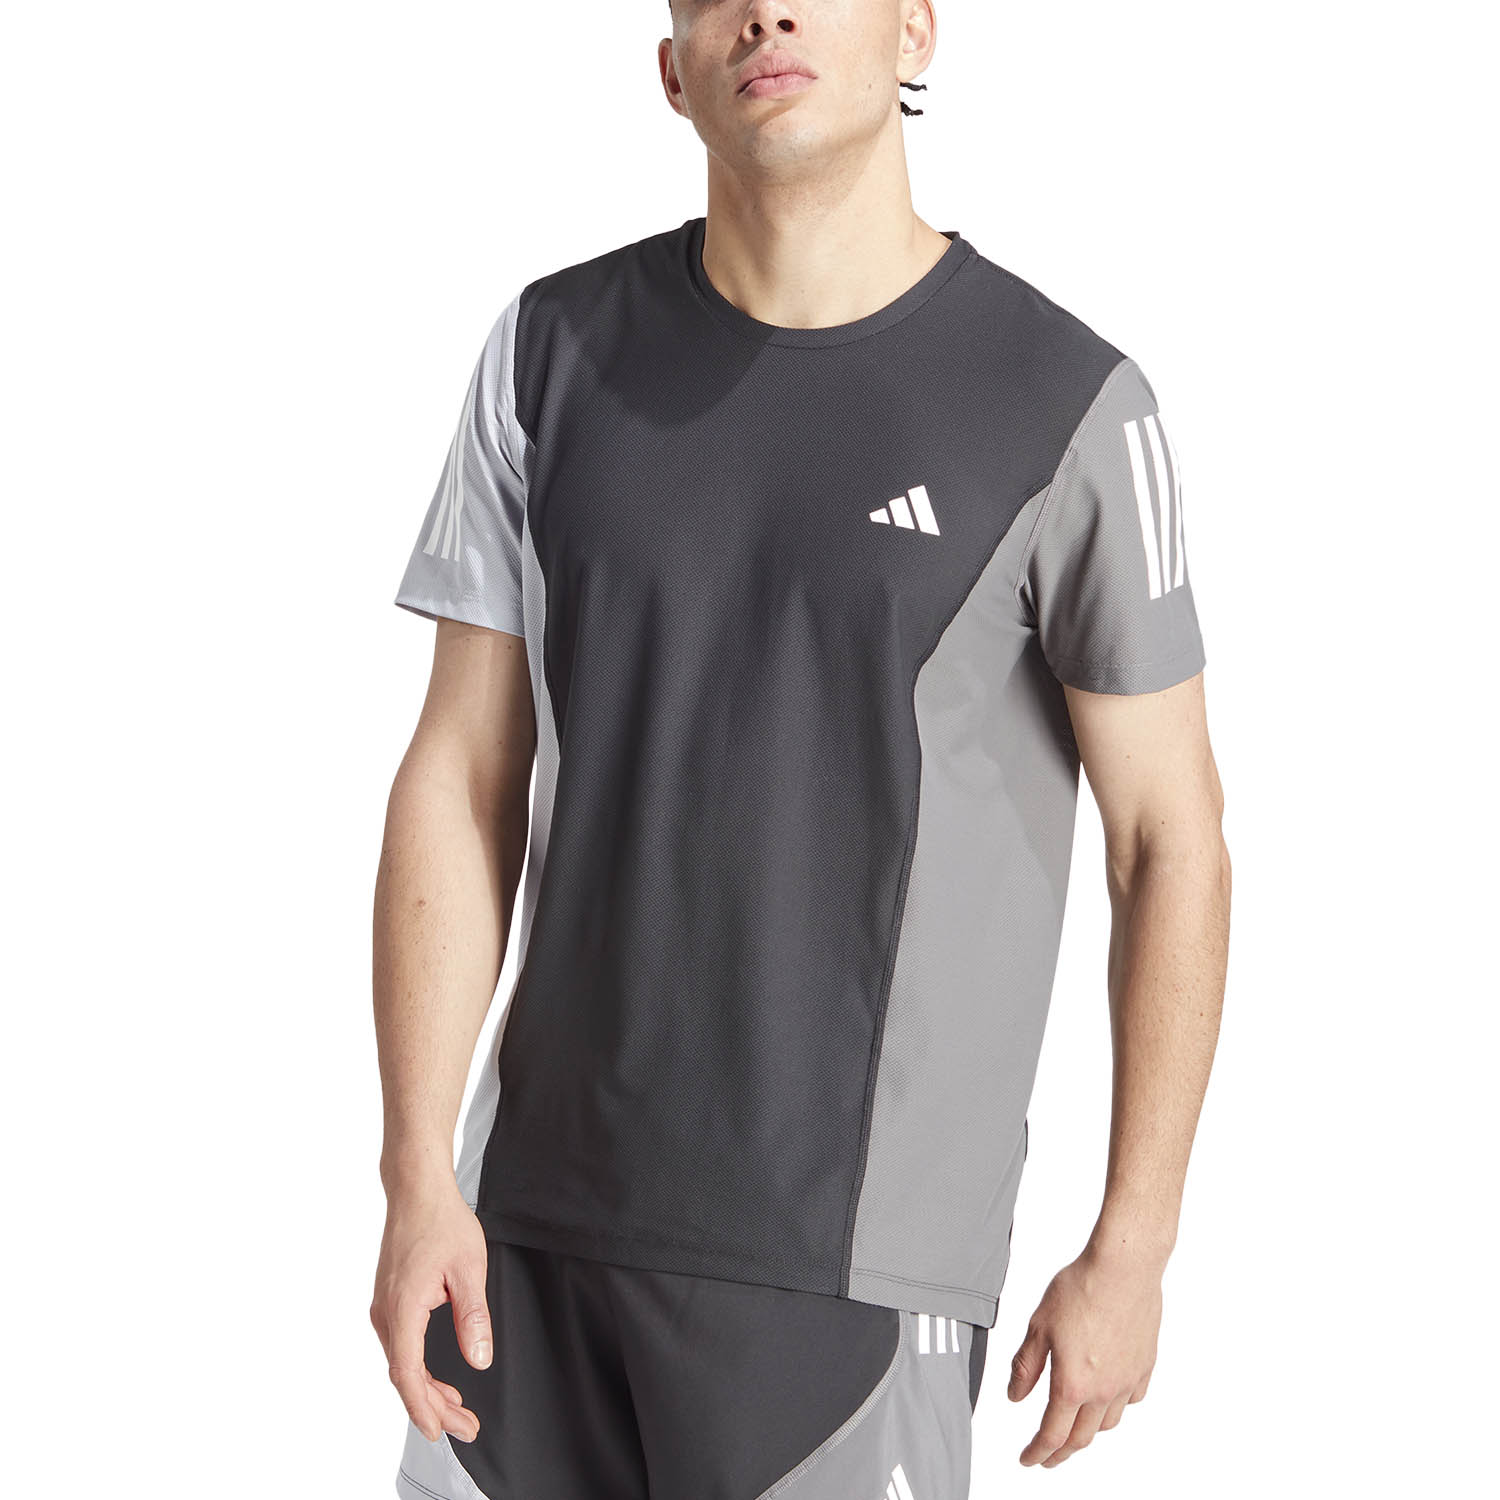 adidas Own The Run Print Camiseta - Black/Halsil/Grey Five